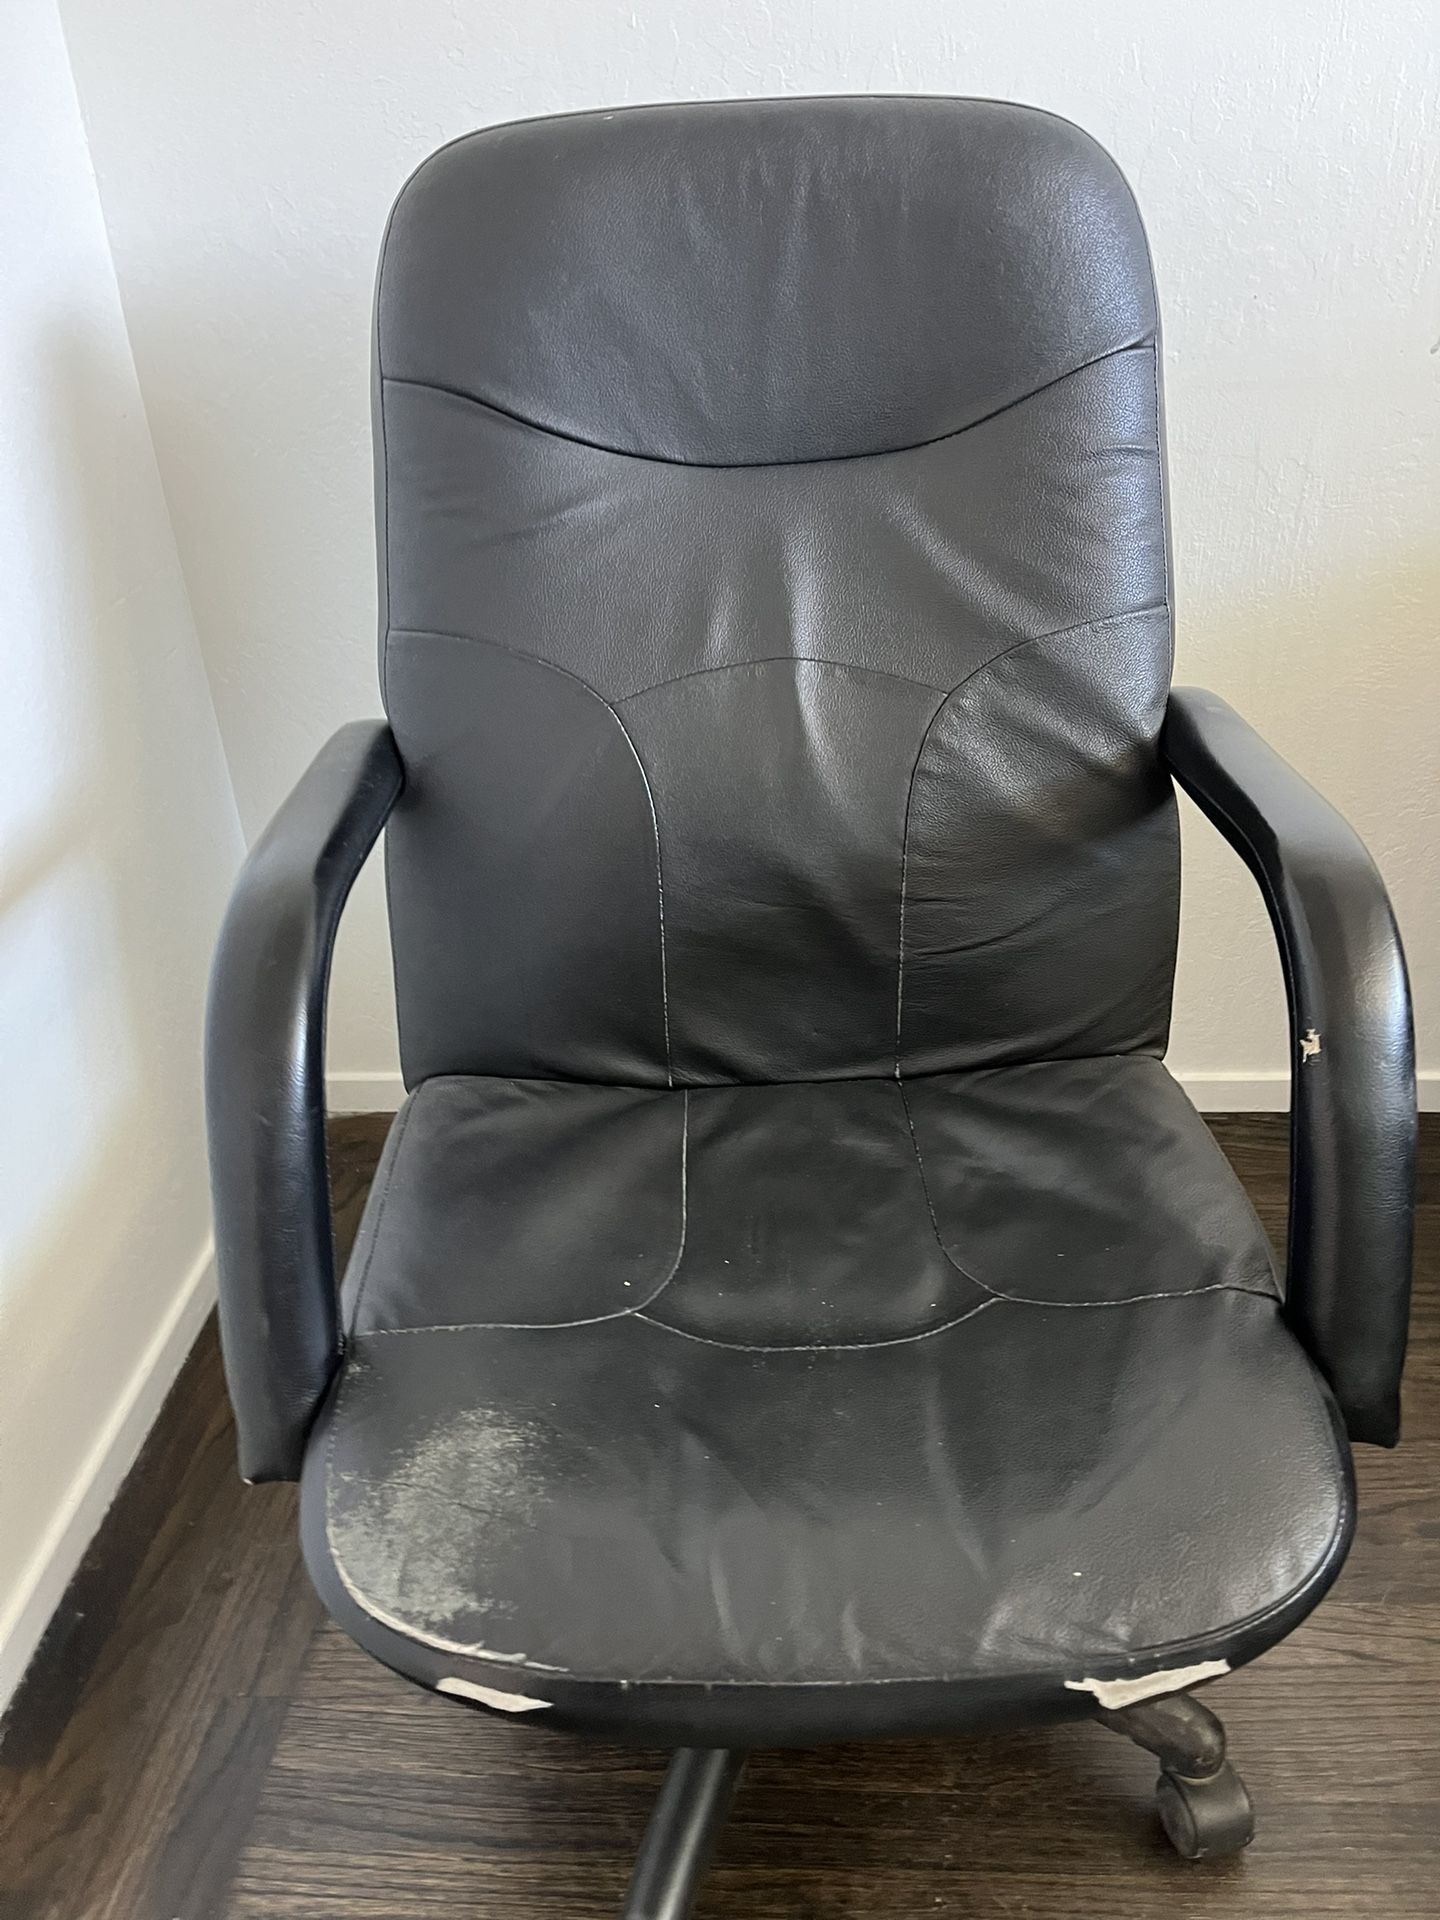 Free Executive Desk Chair